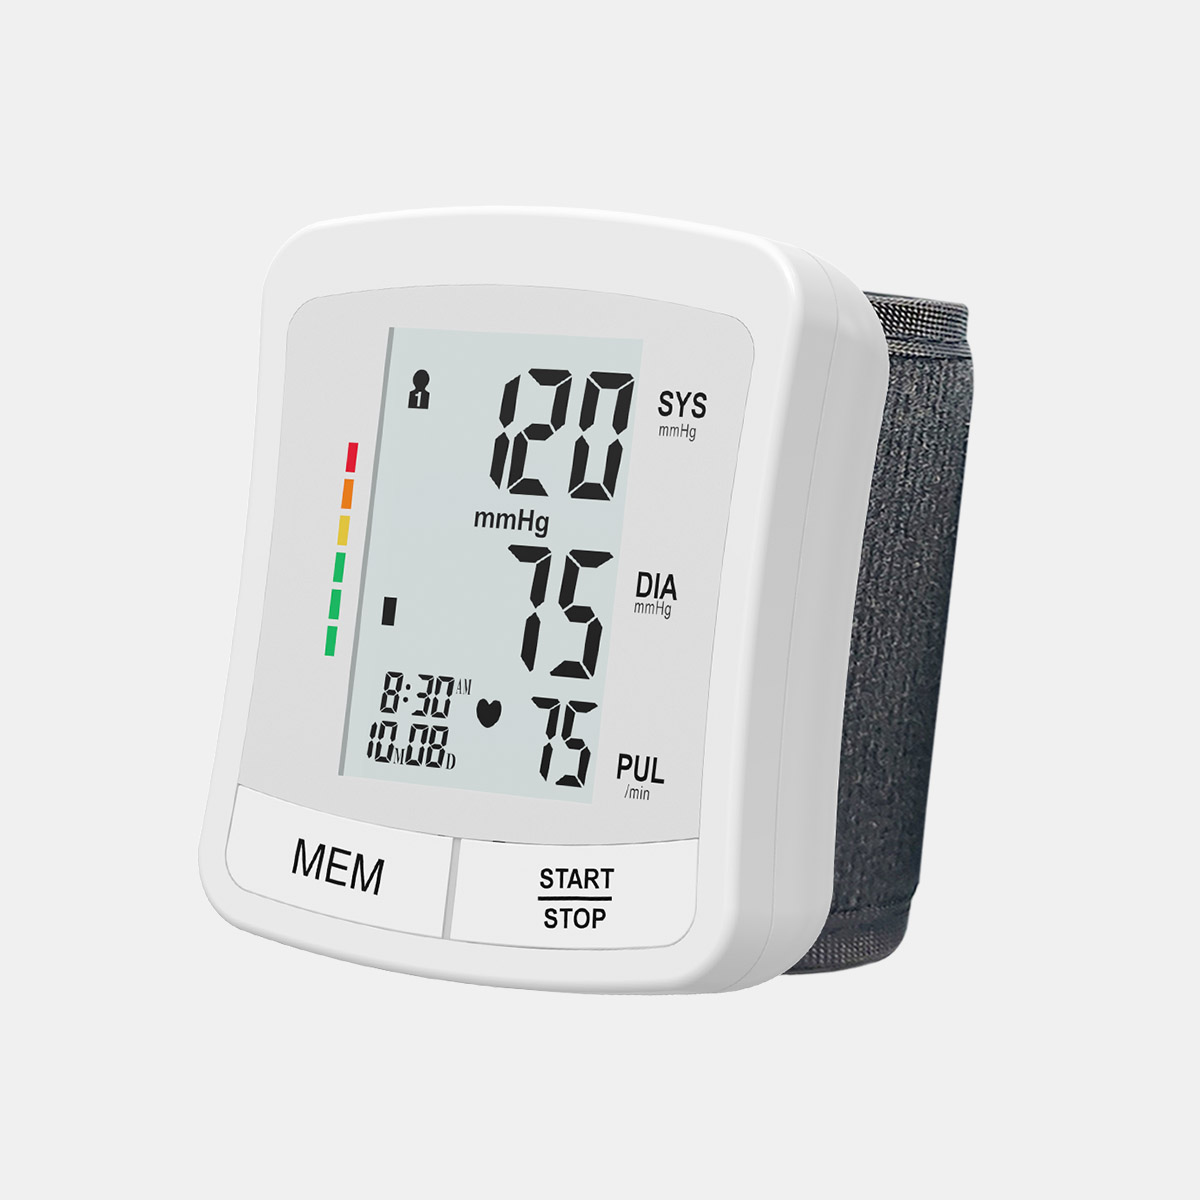 Tirhisa ekaya Nkhathalelo wa Rihanyo Mdr Ce Approved Automatic Digital Blood Pressure Monitor Wrist Tensiometer